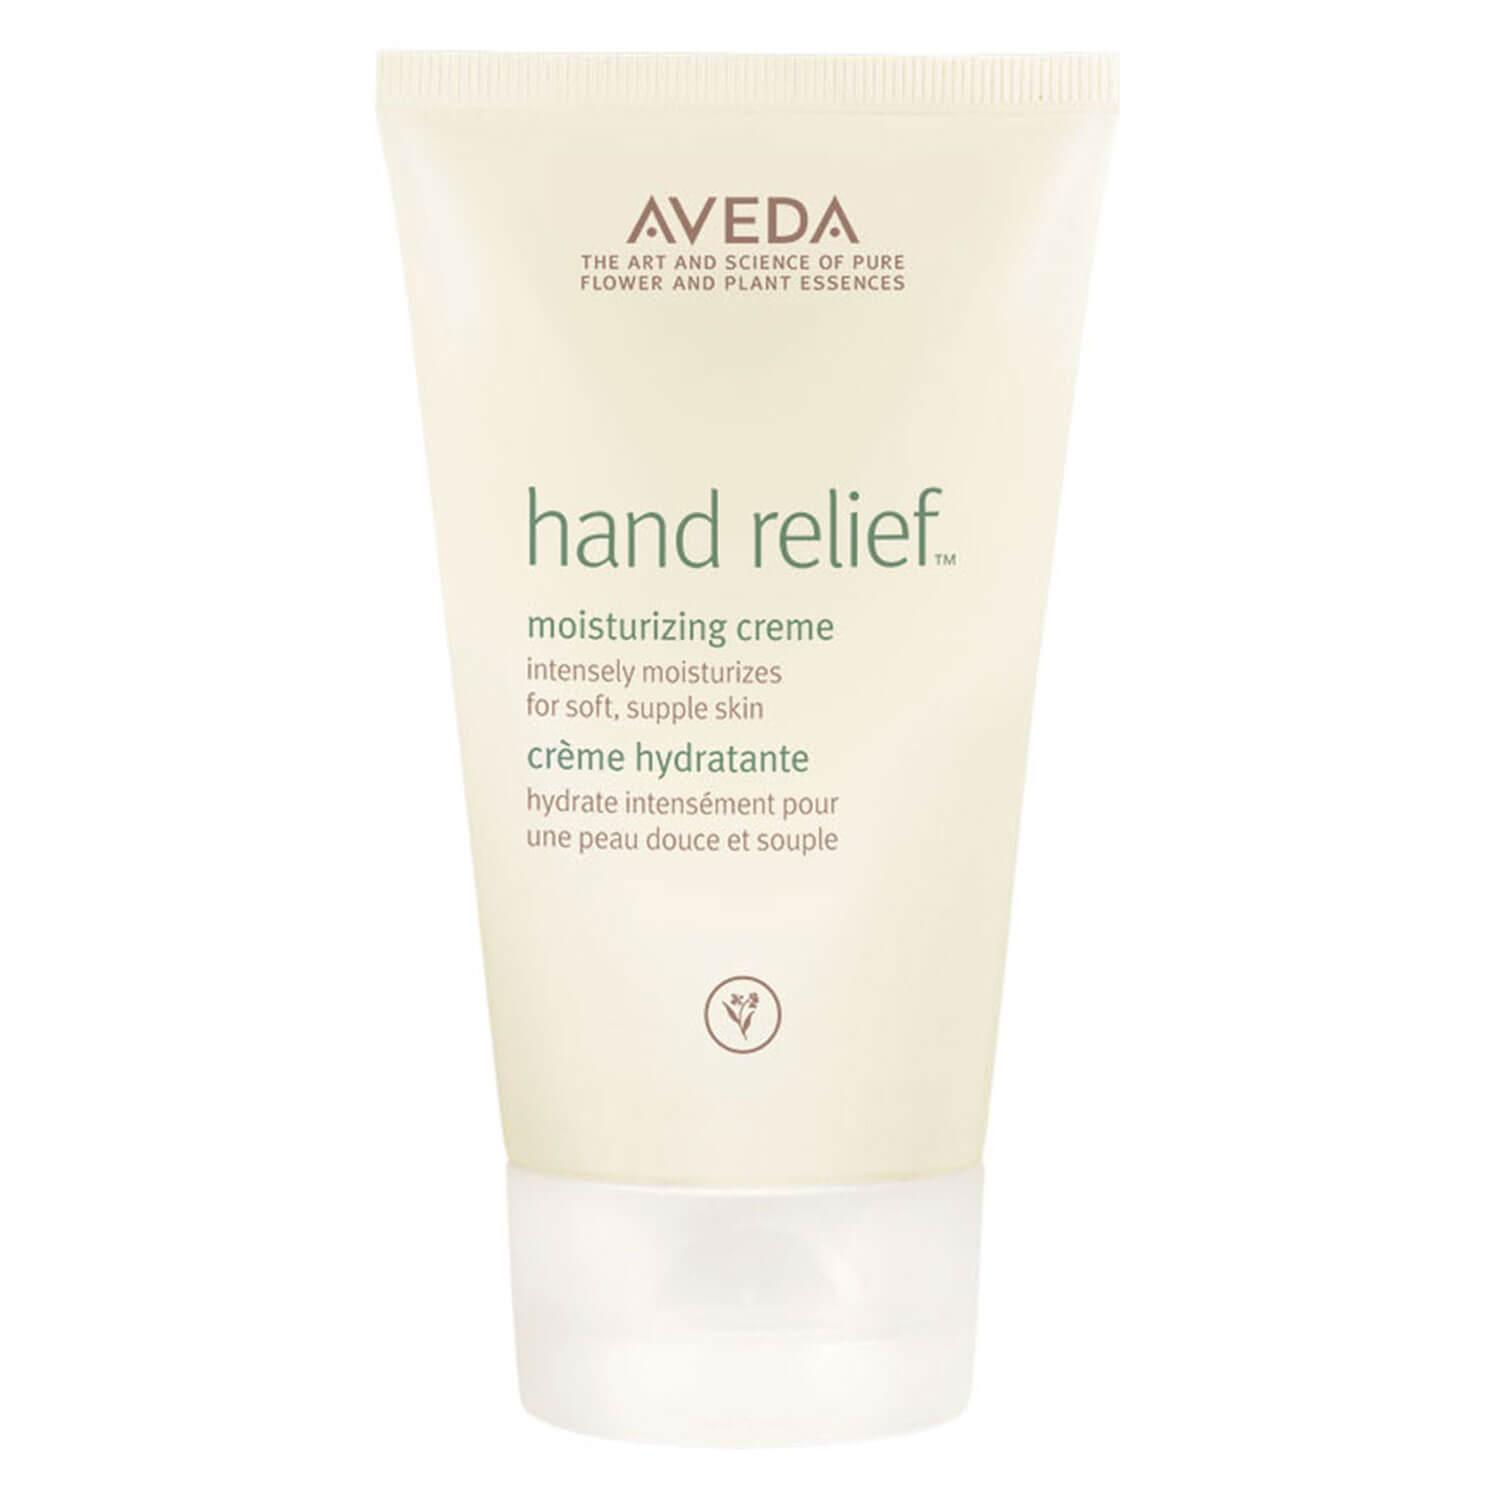 hand relief - moisturizing creme